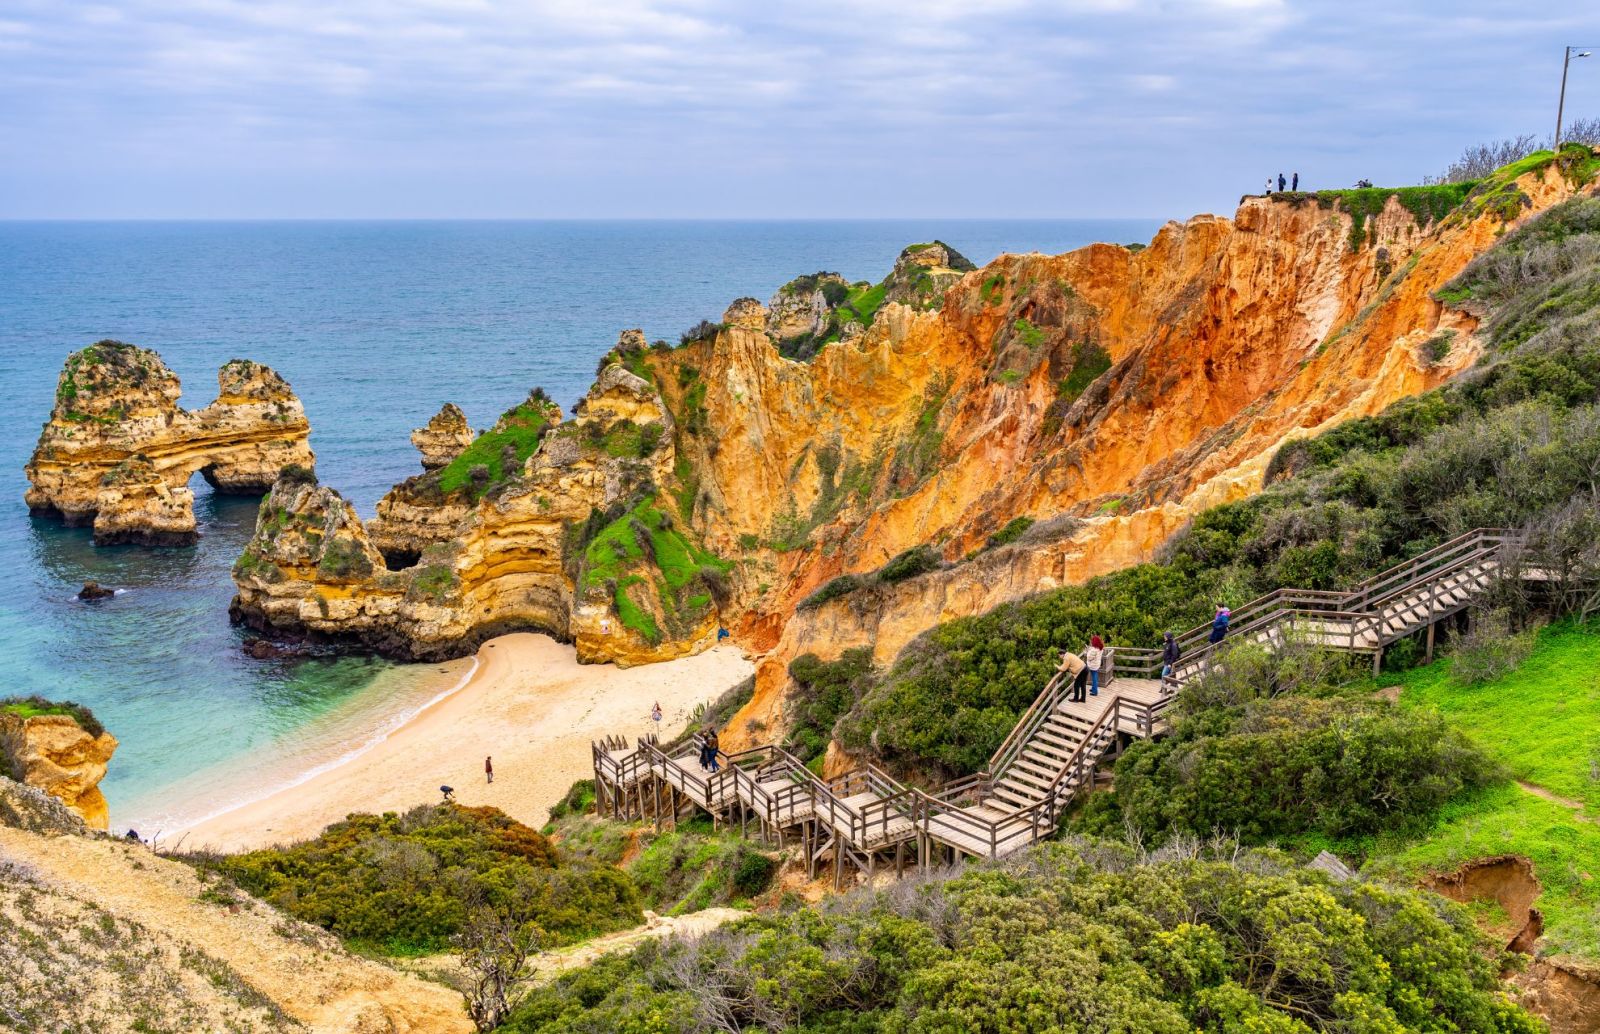  PRAIA DO CAMILO, Algarve, Algarve best beaches